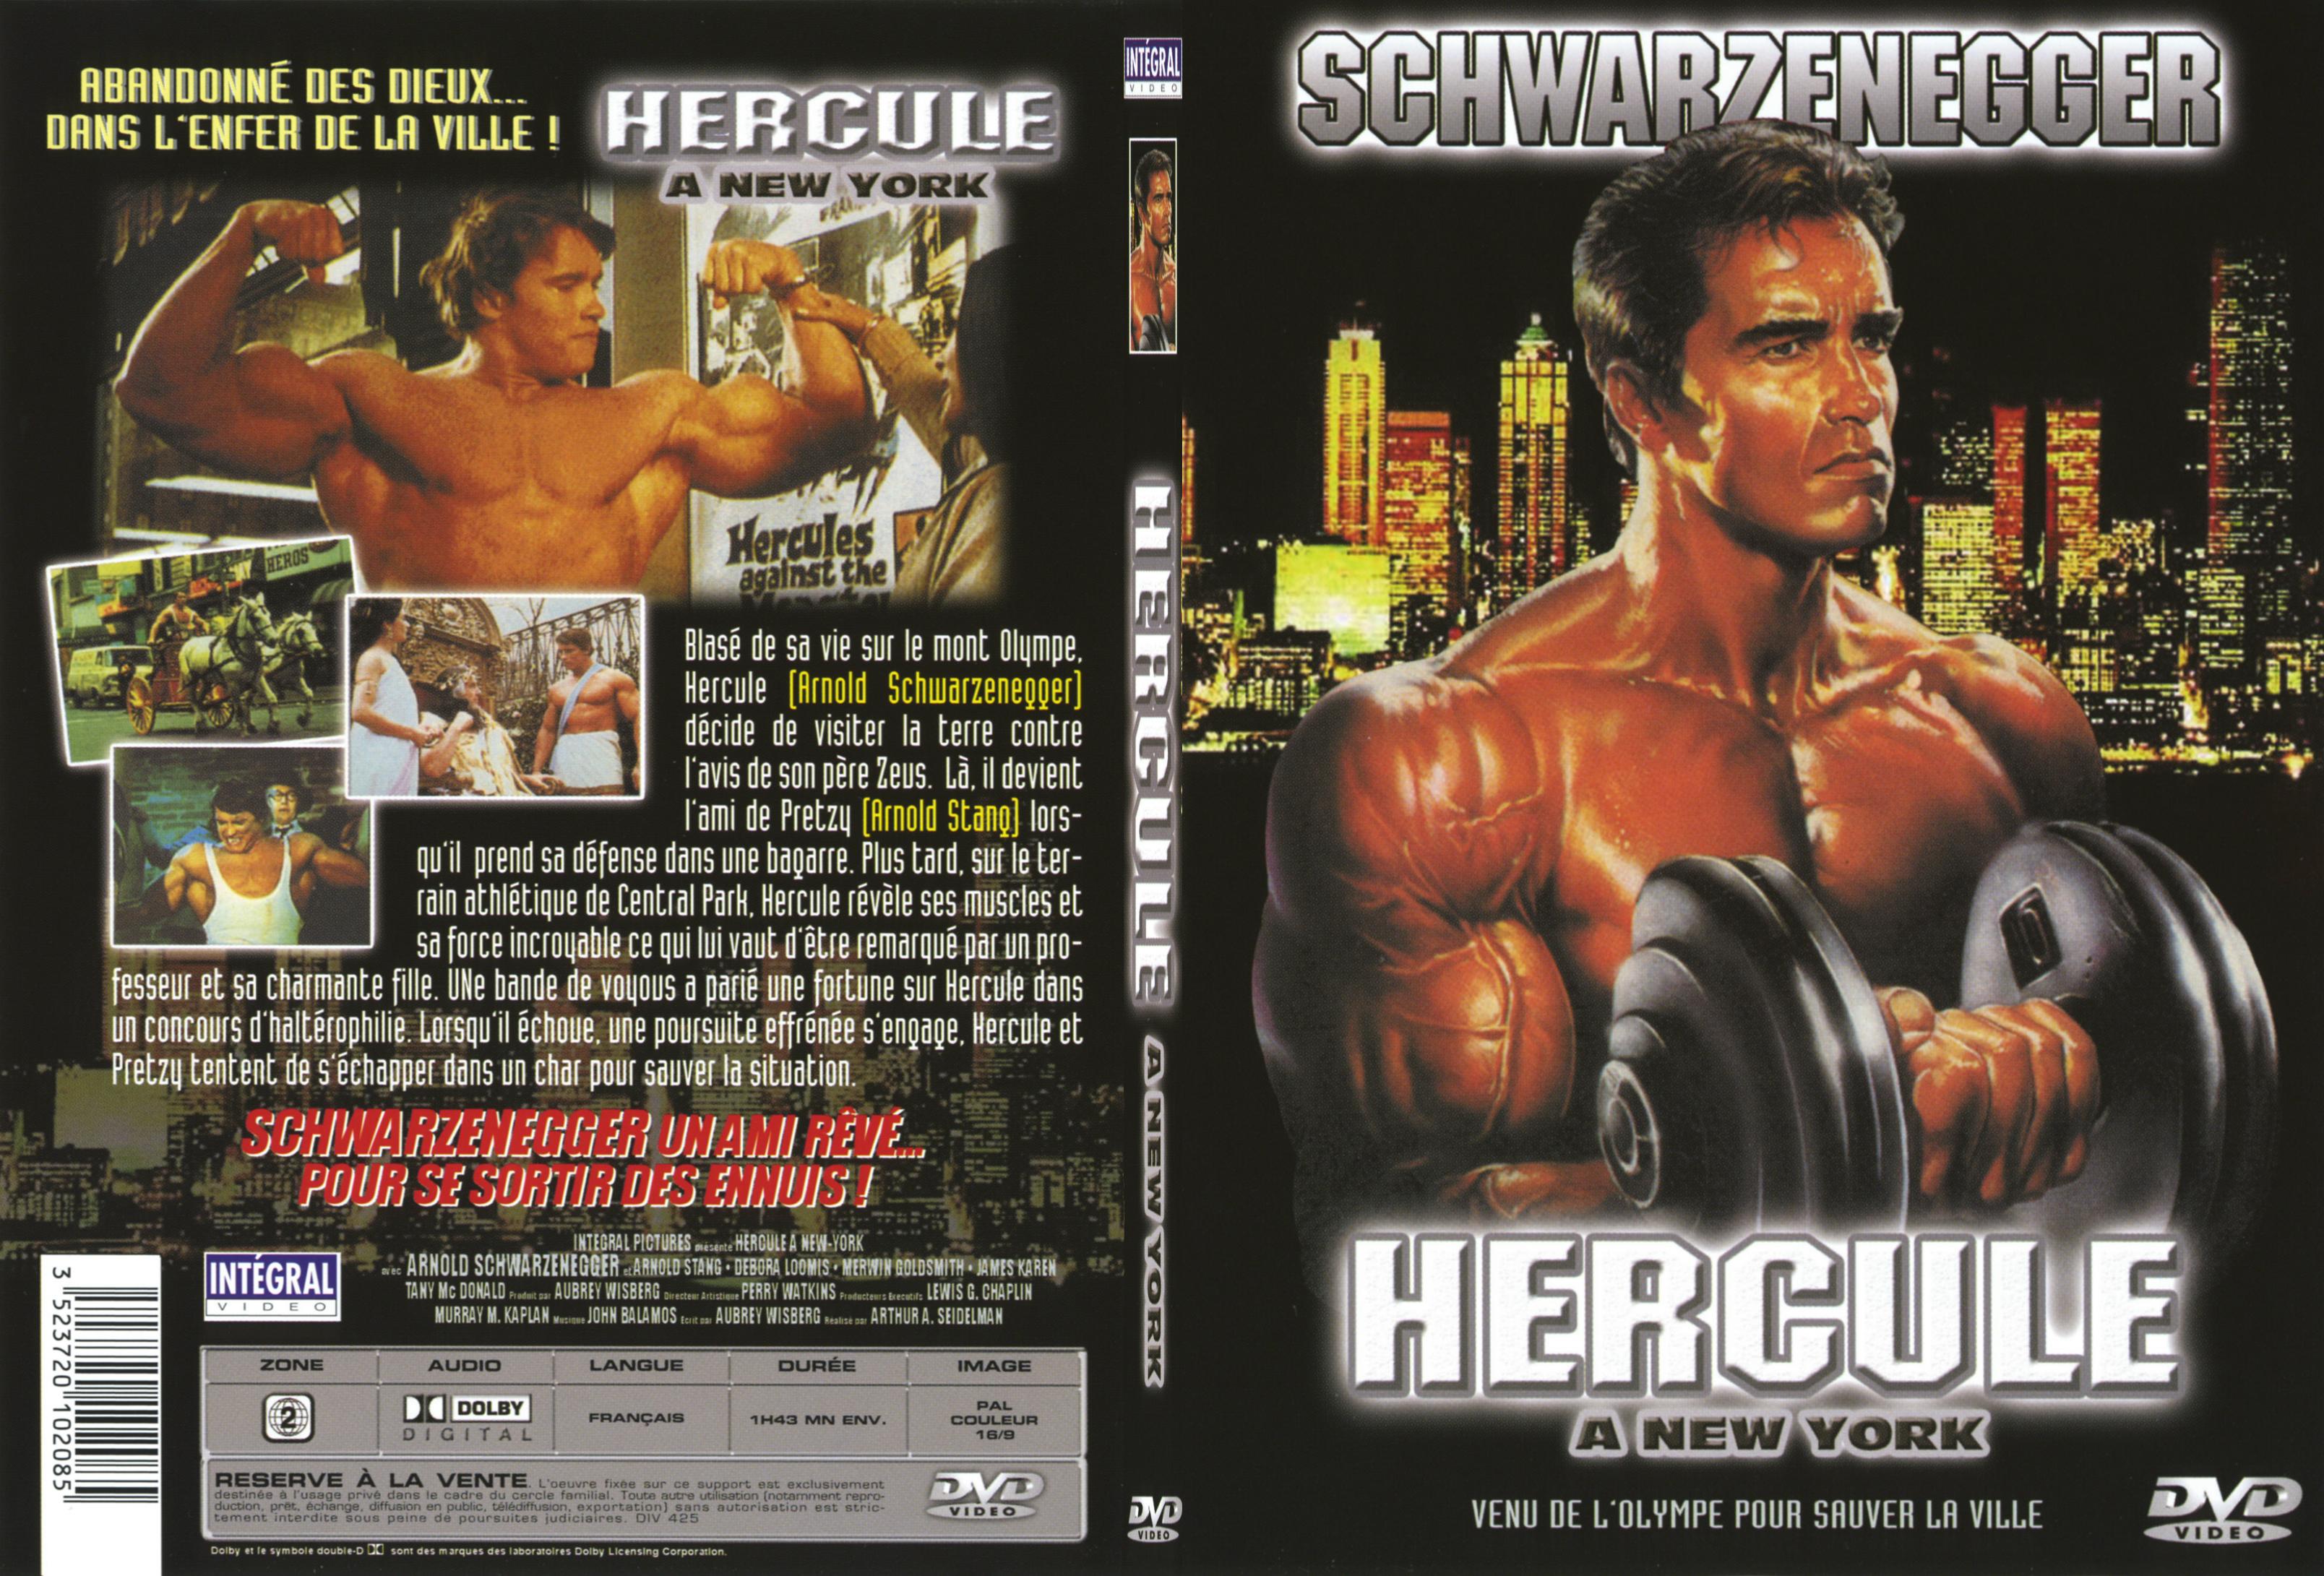 Jaquette DVD Hercule a new york - SLIM